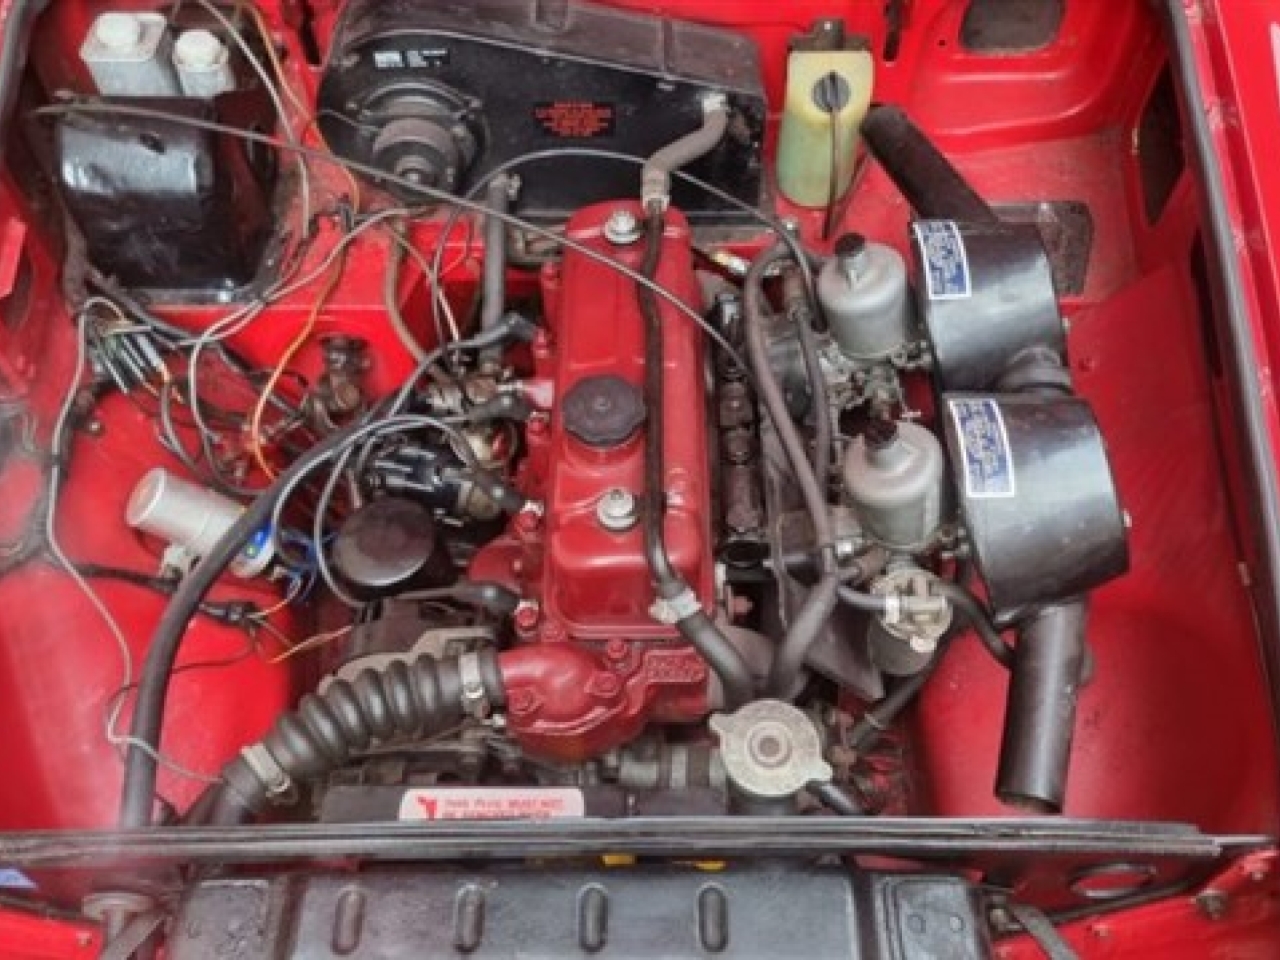 1969 MG B Roadster (Tartan Red)